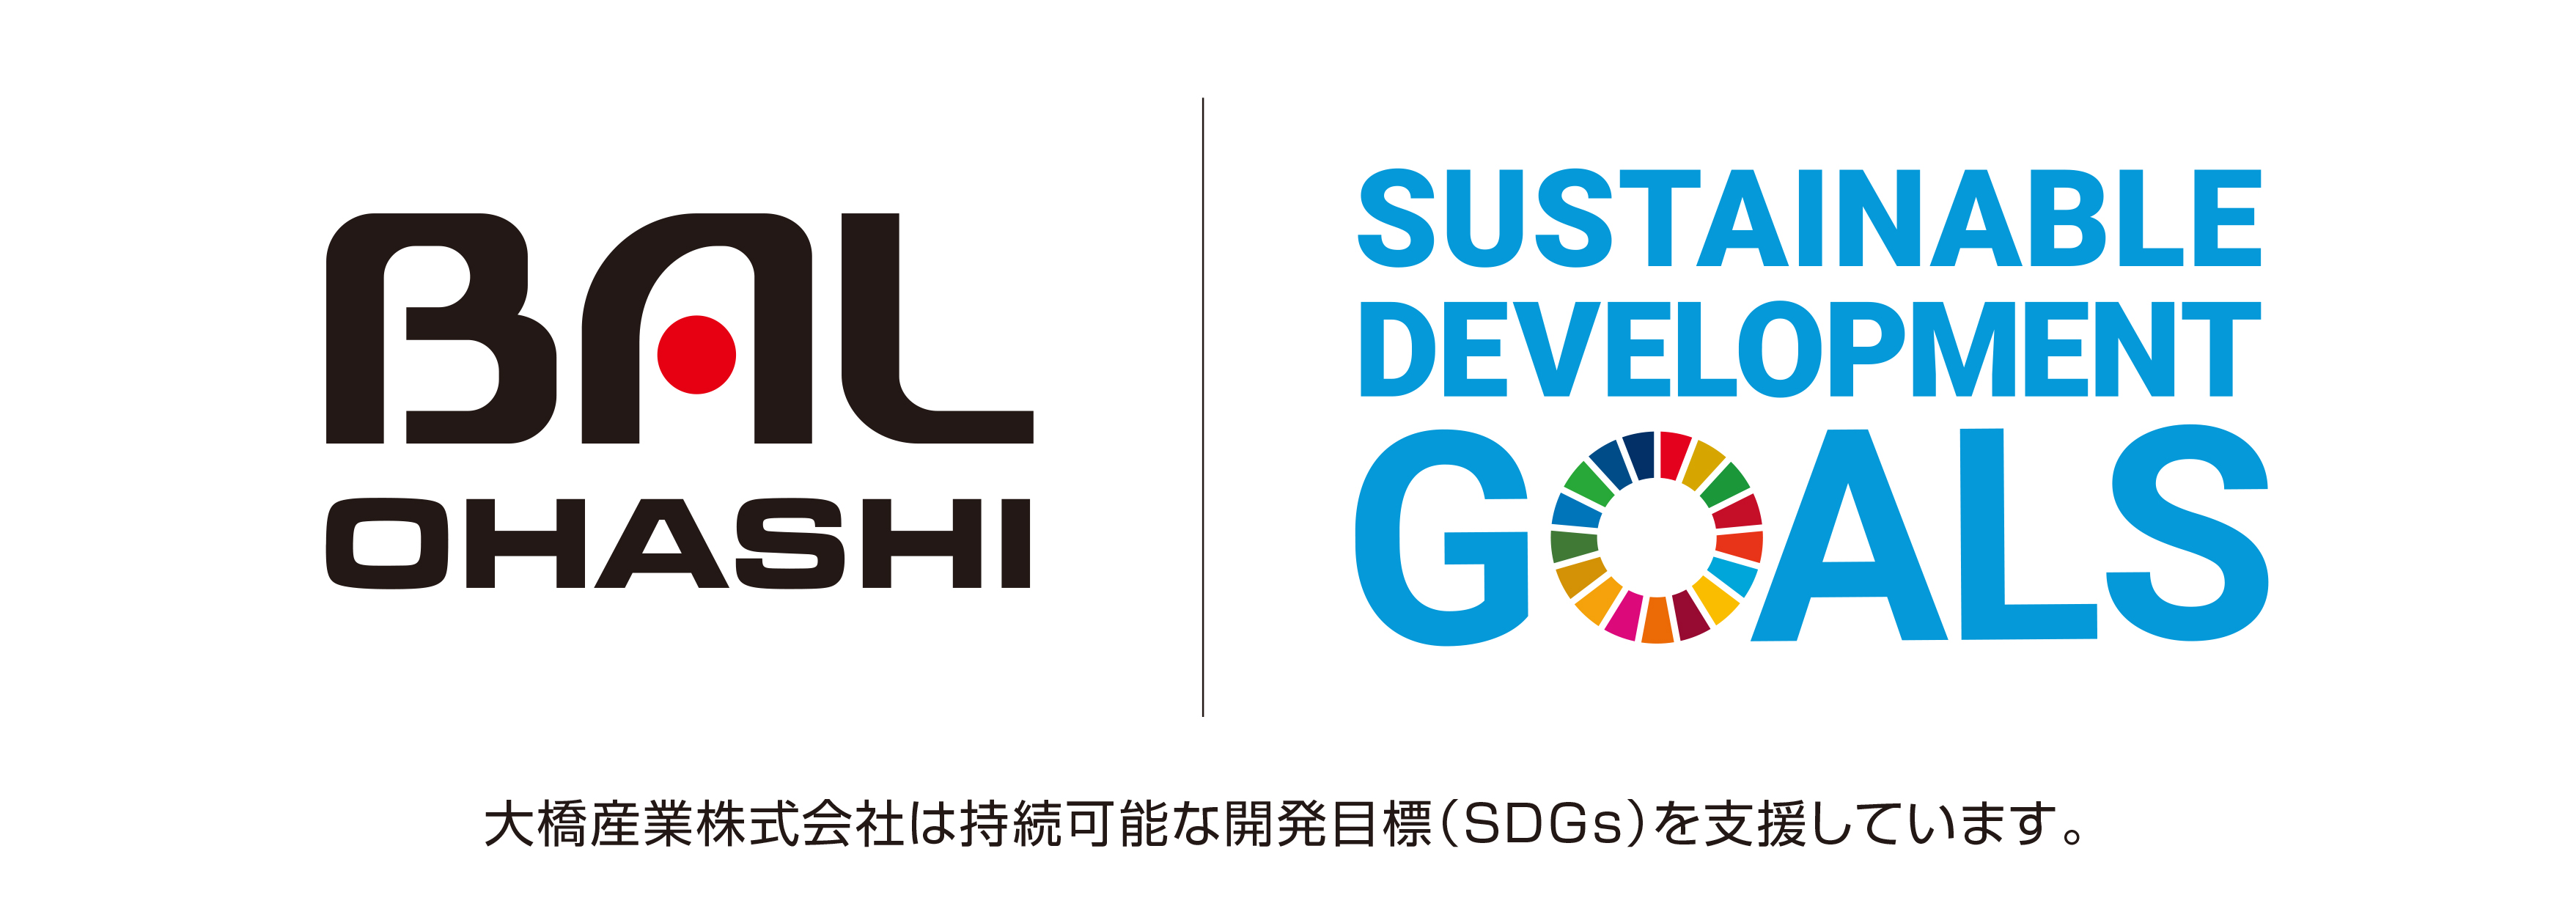 SDGs_1.jpg